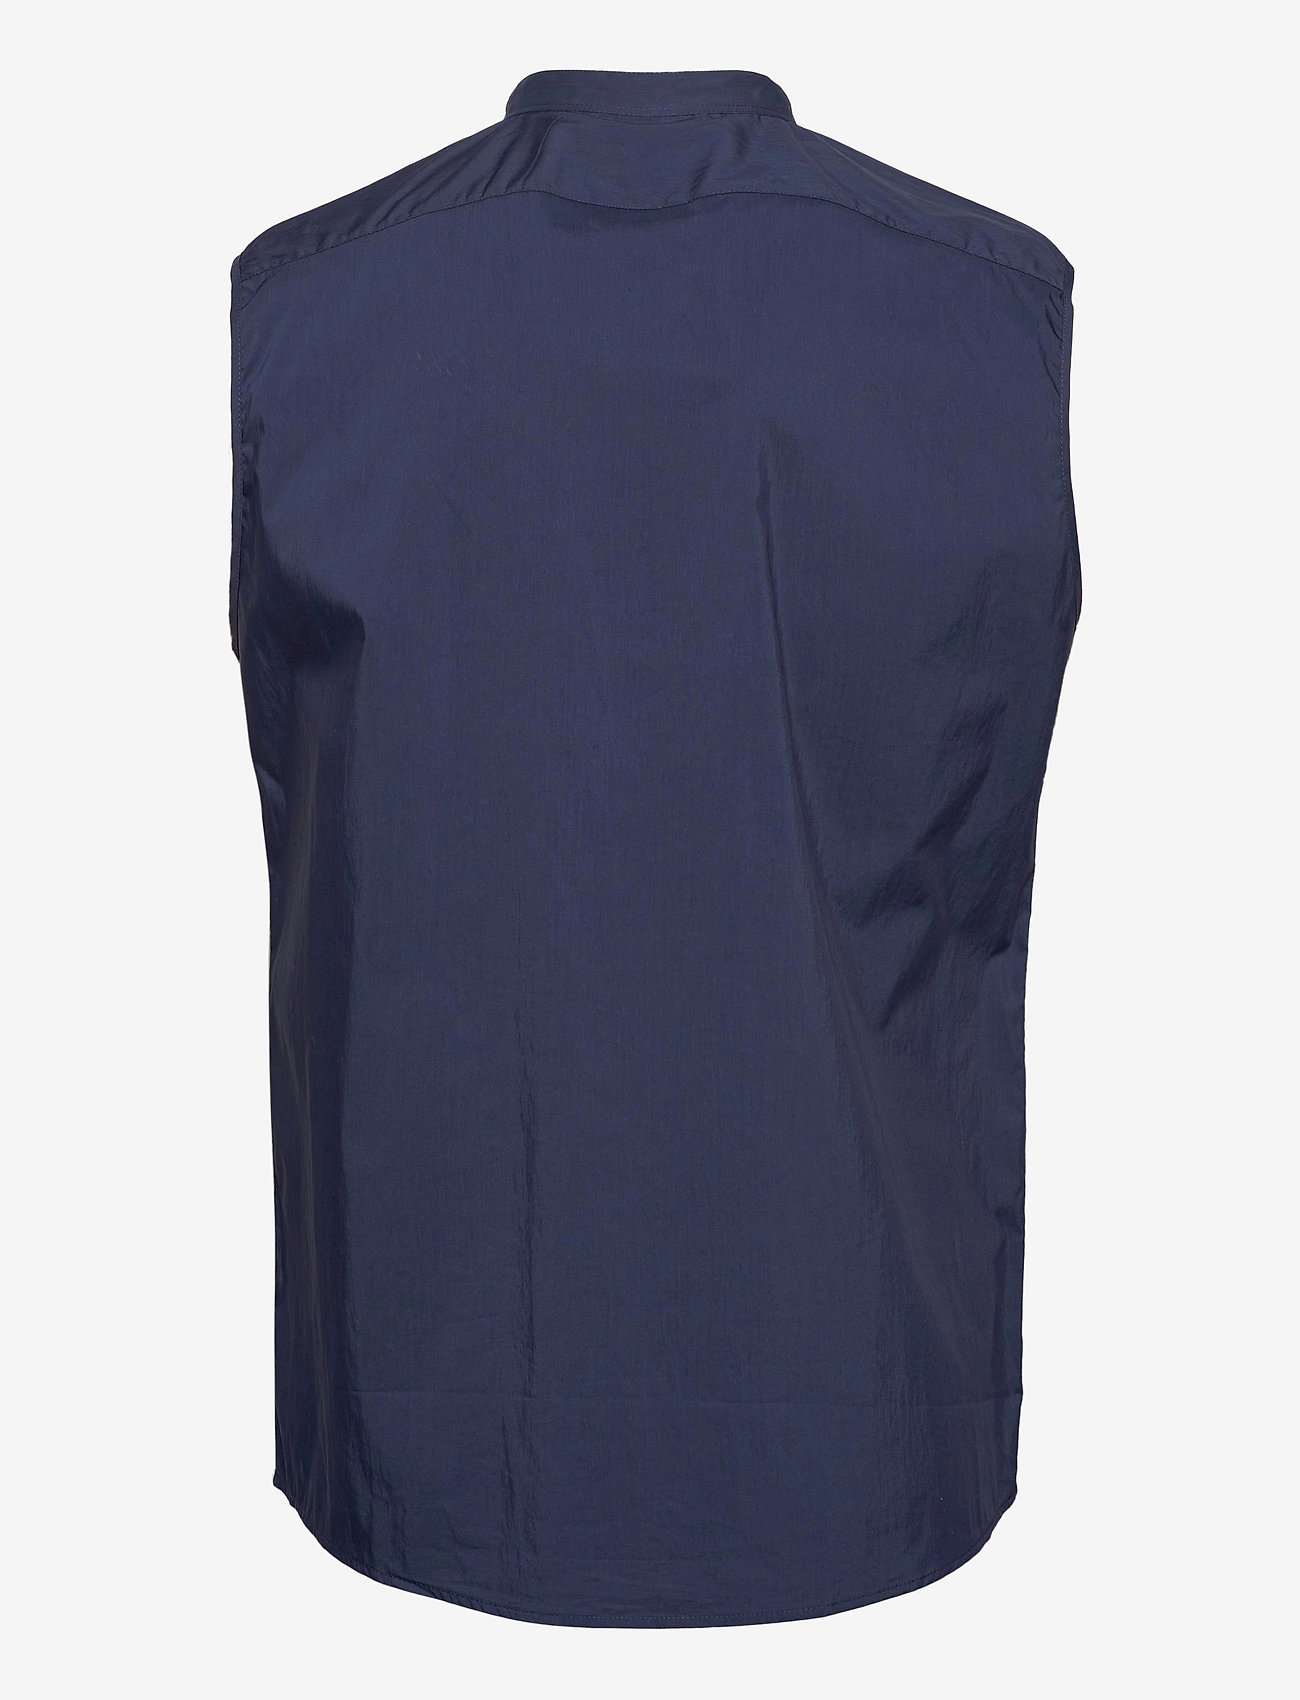 Eton - Men's shirt: Casual  Cotton & Nylon - spring jackets - navy blue - 1